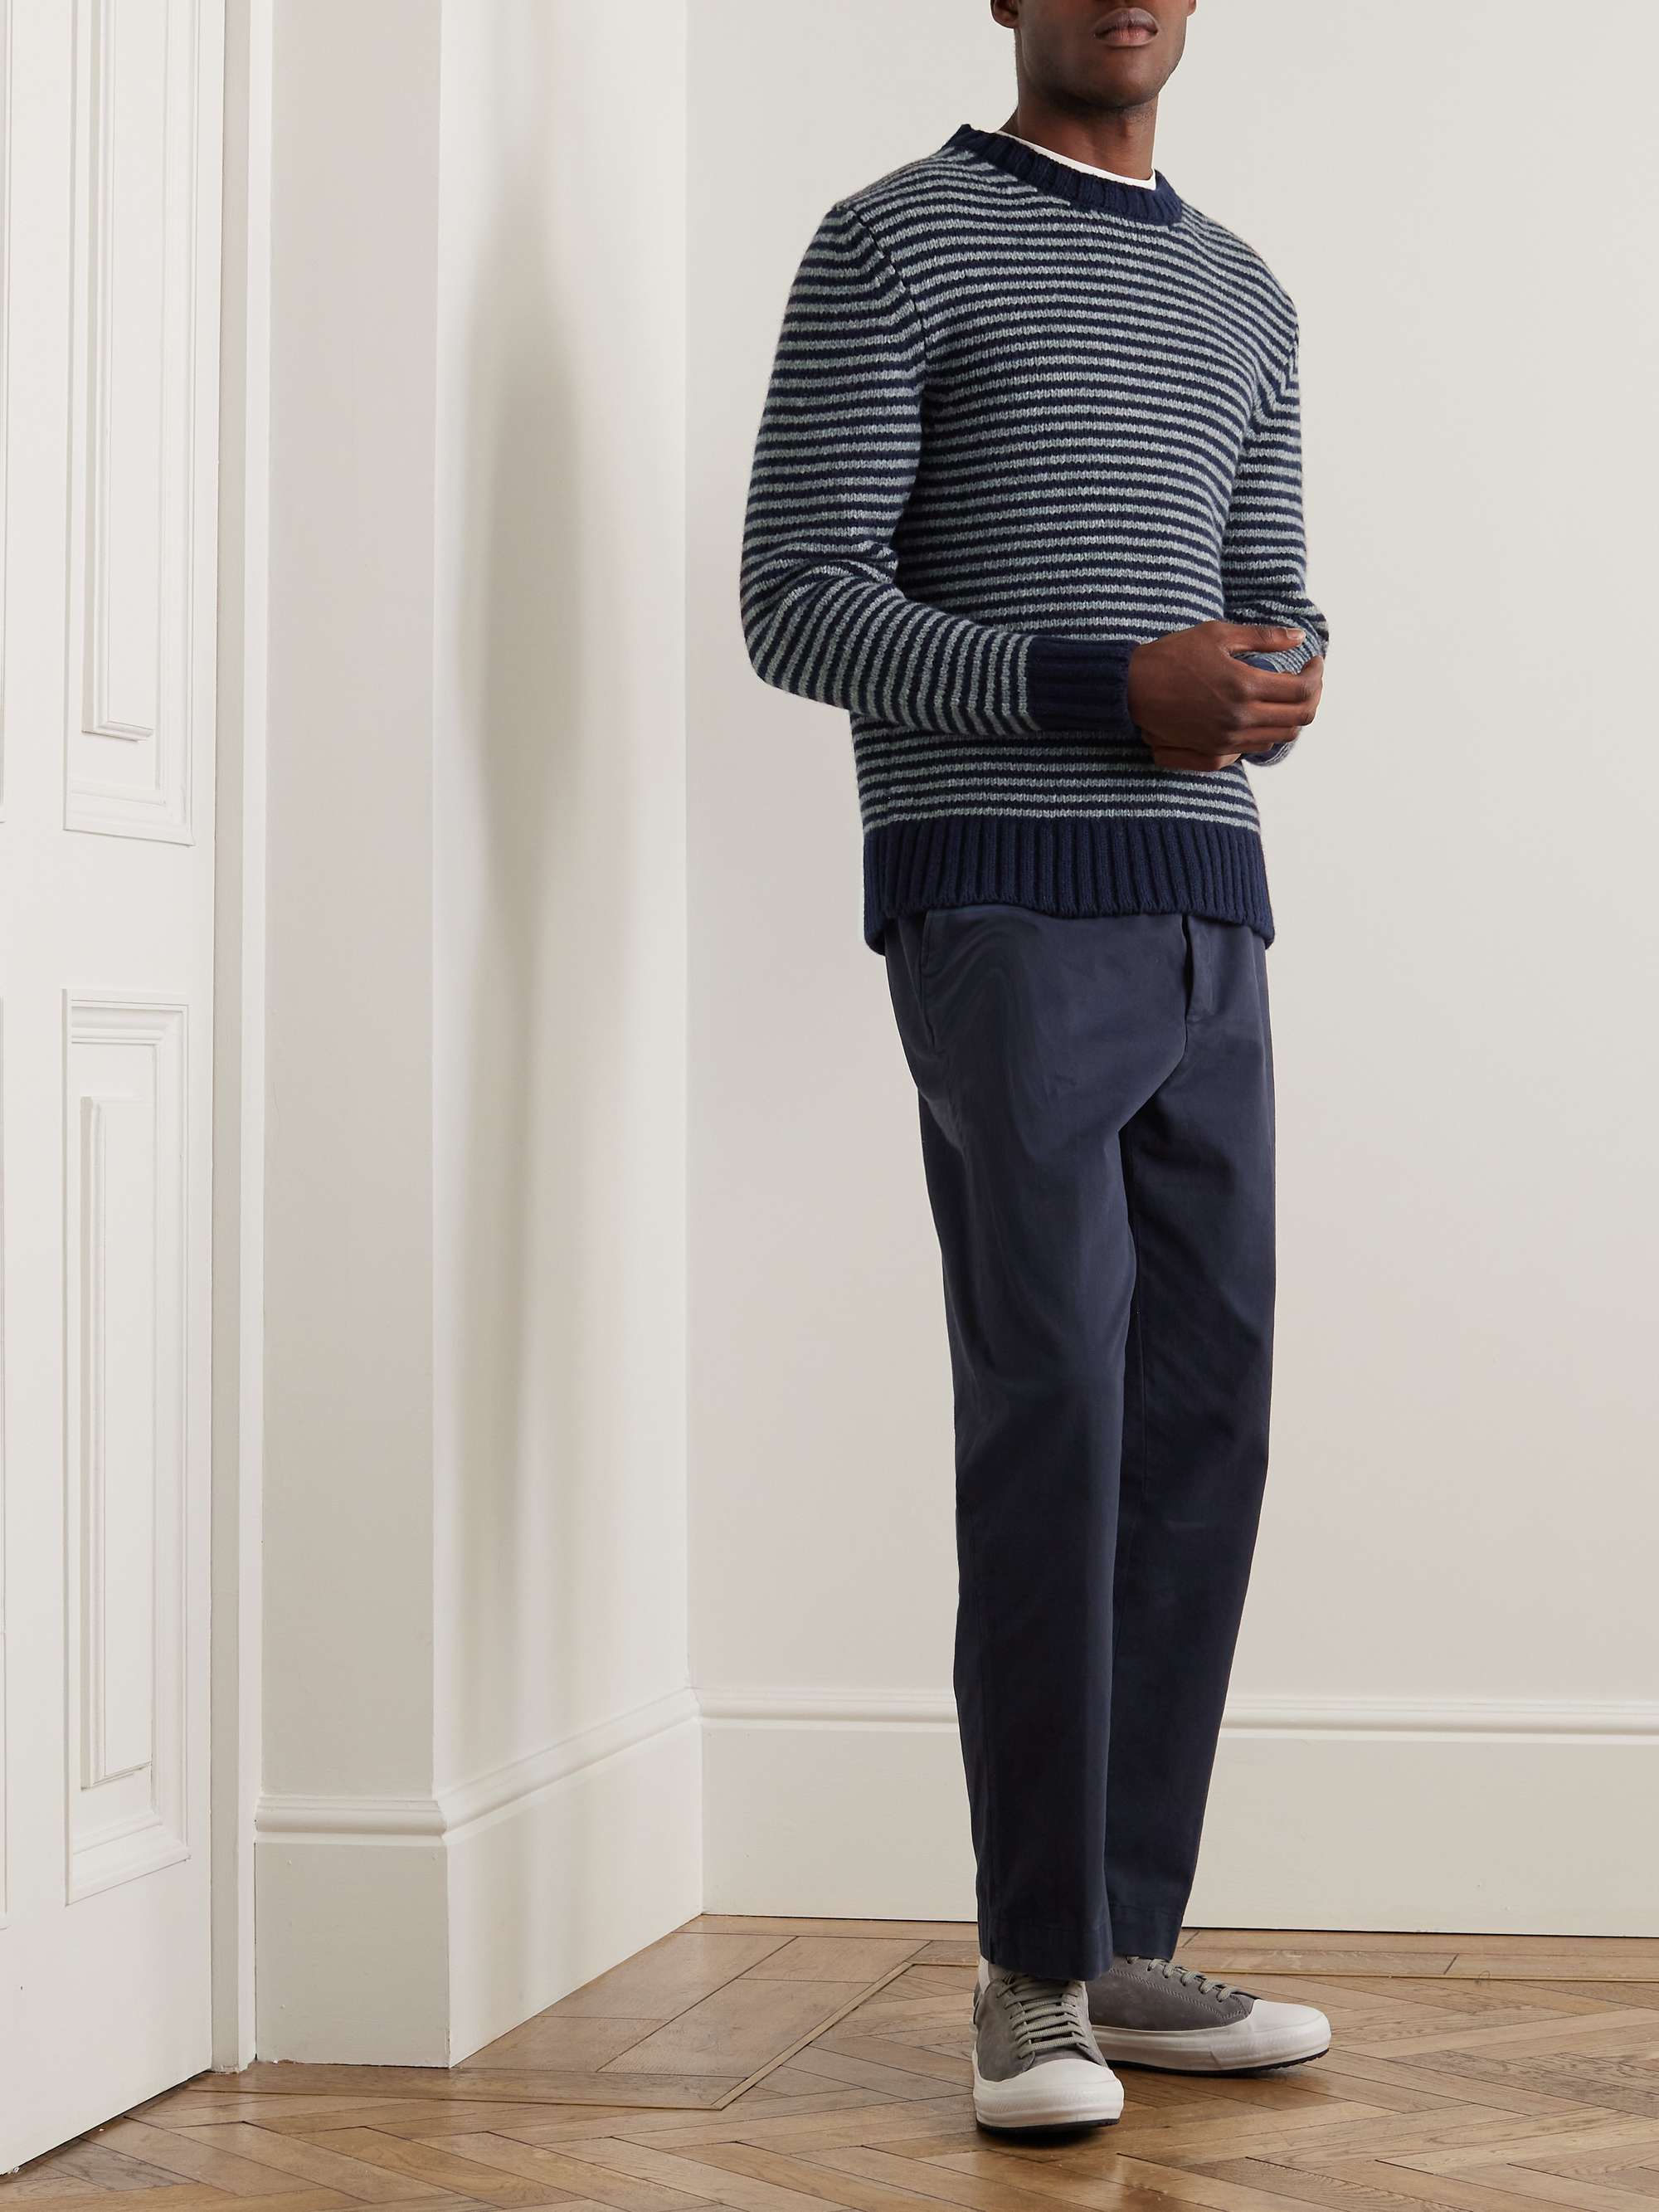 OFFICINE GÉNÉRALE Marco Striped Merino Wool-Blend Sweater for Men | MR ...